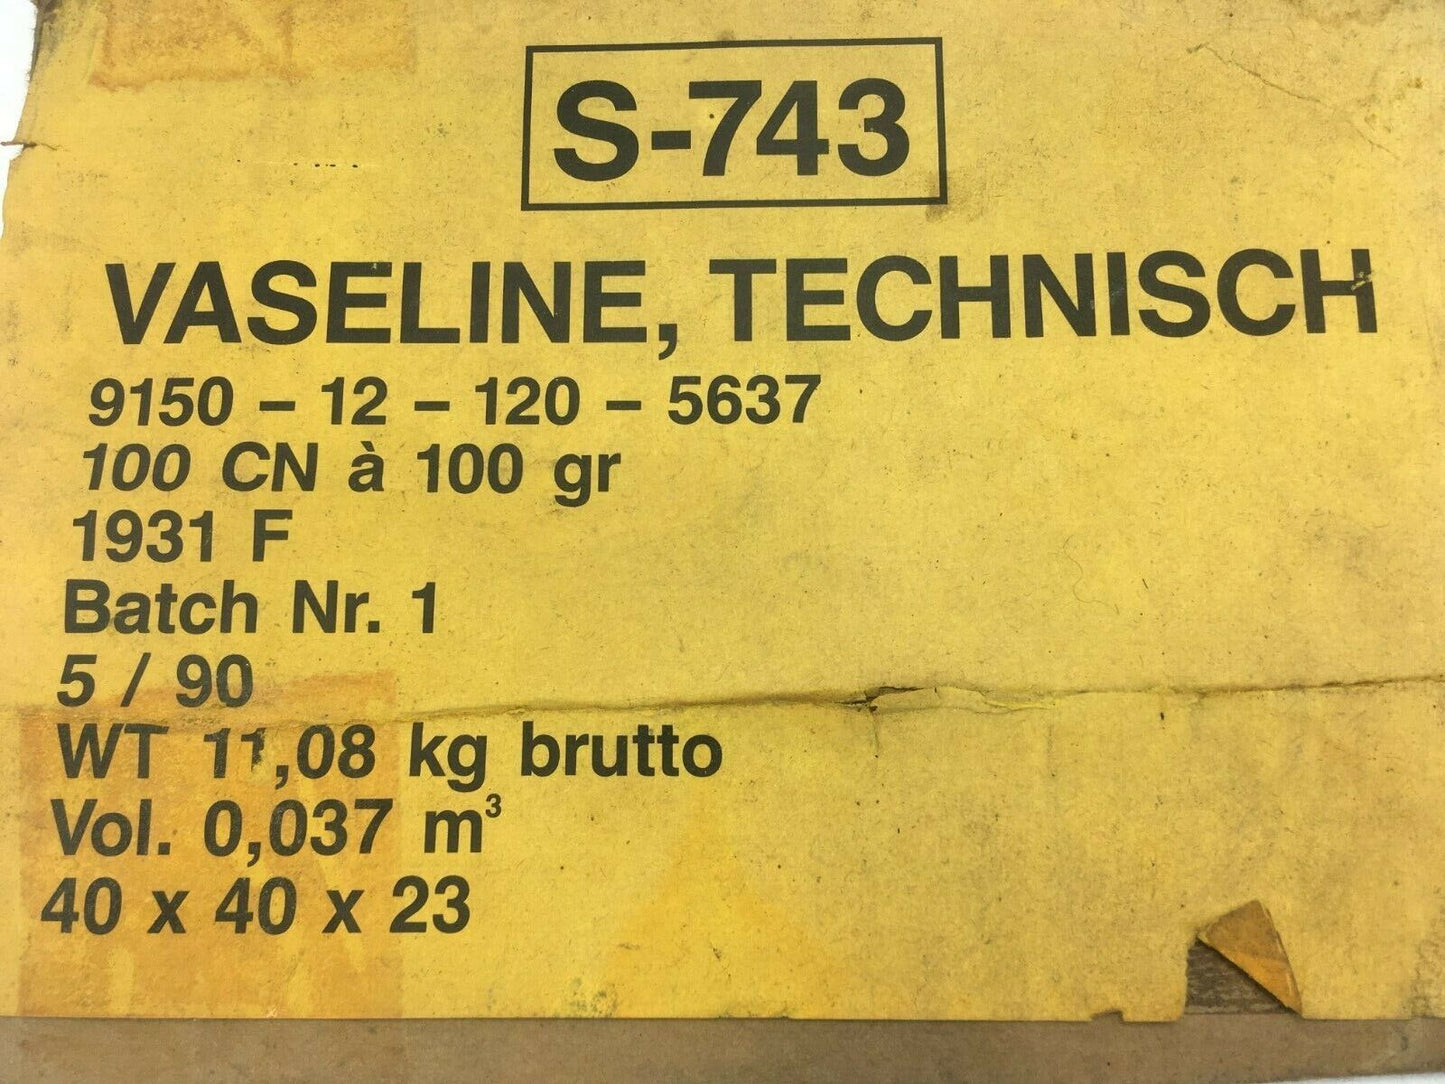 1 Dose original Bundeswehr Vaseline, technisch S-743 Vaselin Schmierstoff 100 ml